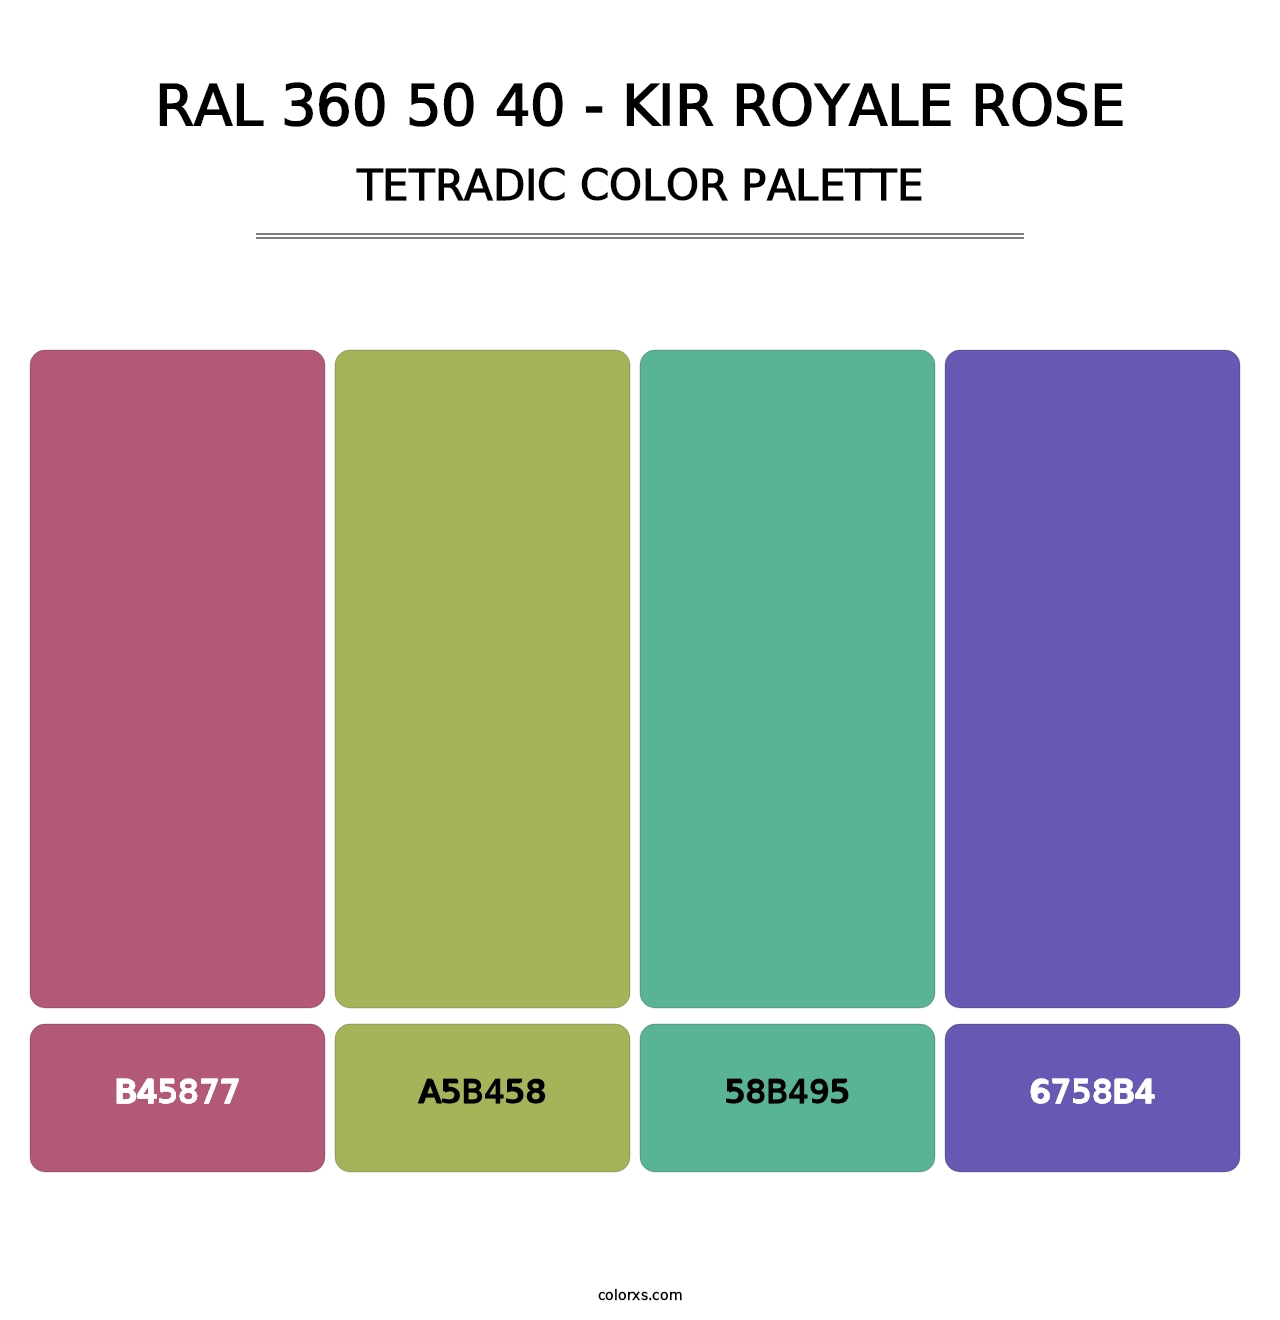 RAL 360 50 40 - Kir Royale Rose - Tetradic Color Palette